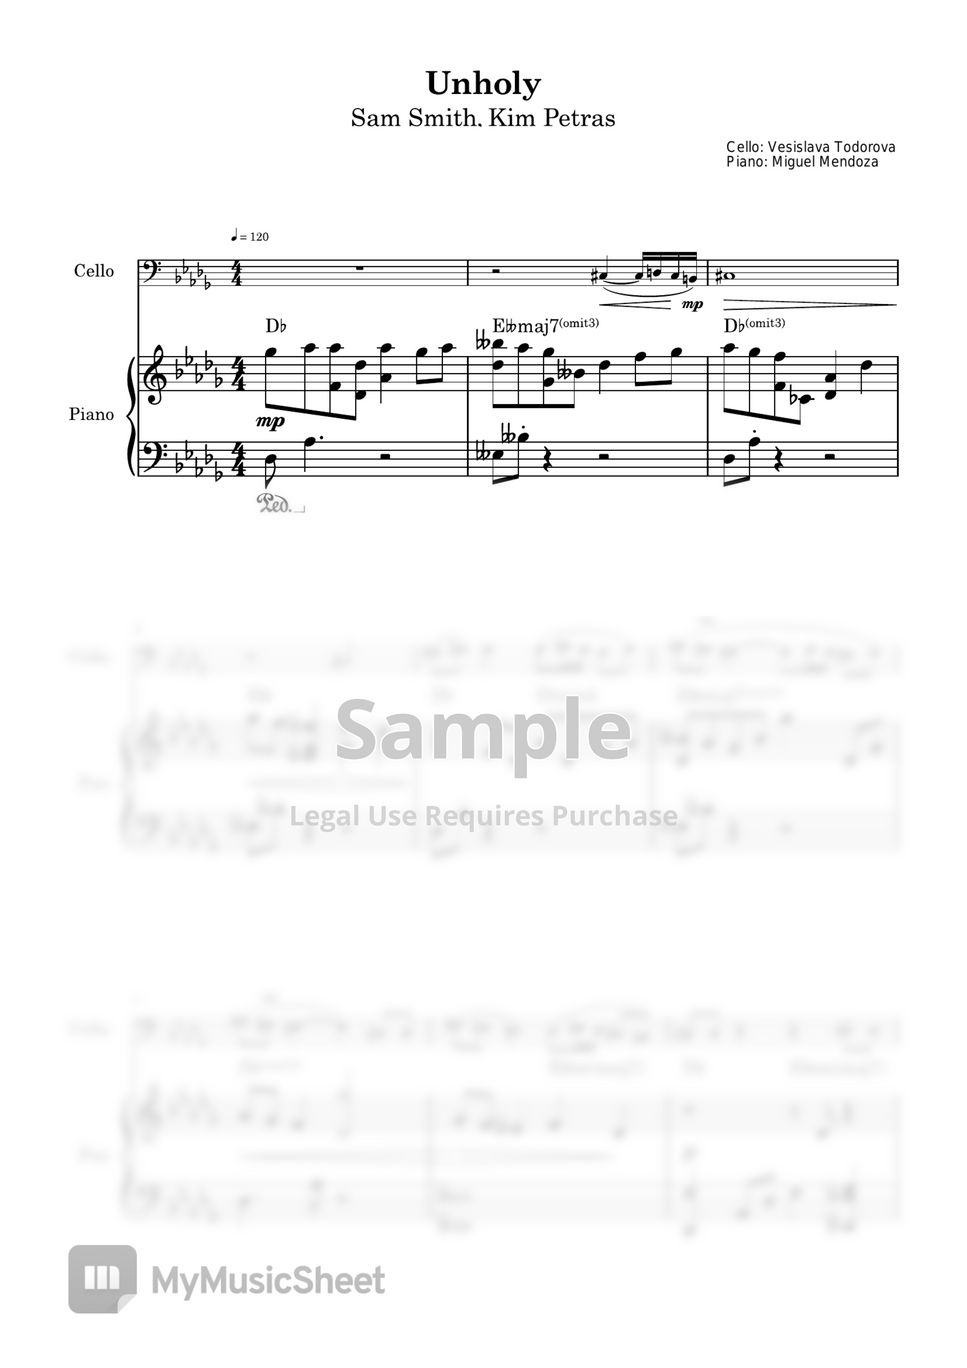 Sam Smith - Unholy (Piano & Cello) by Vesislava Todorova